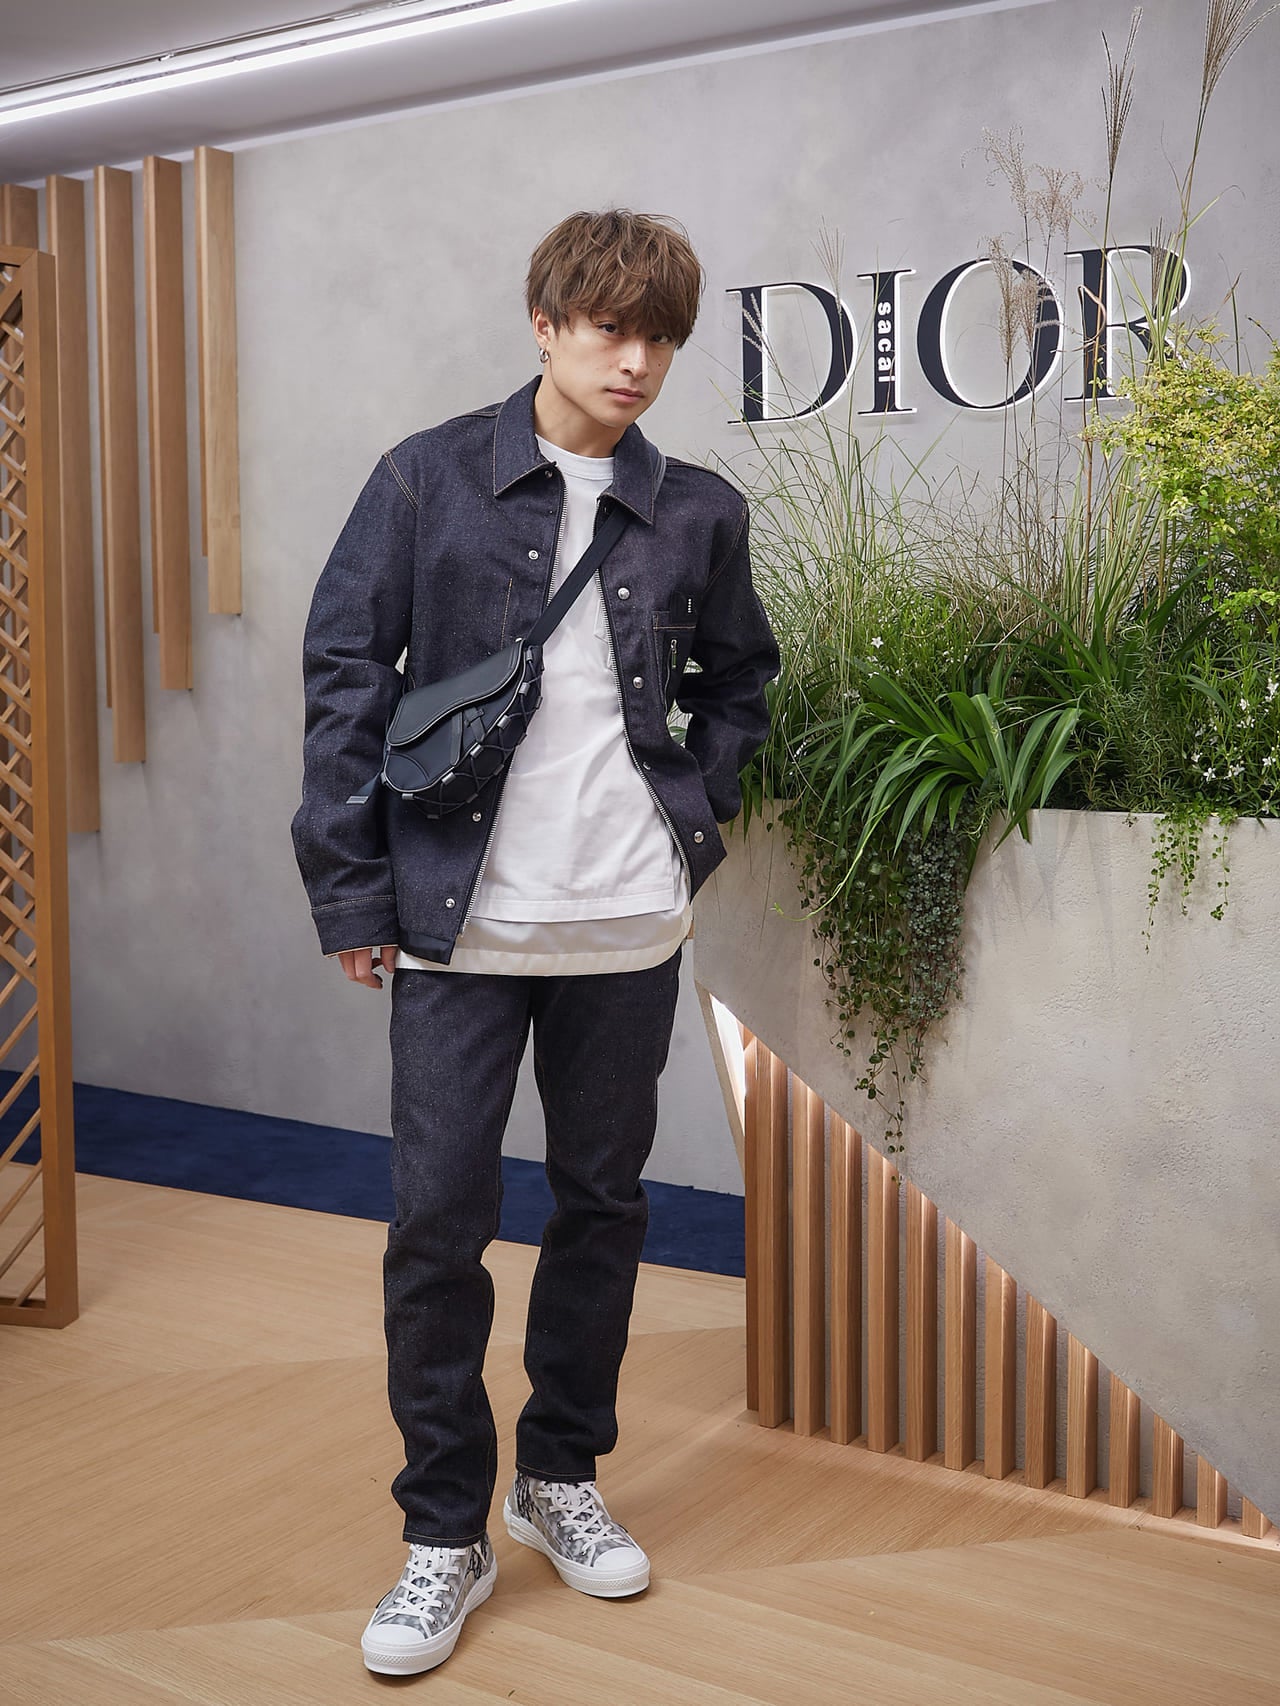 Dior ディオール sacai サカイ コラボ シャツ ジャケット | www.unimac.az